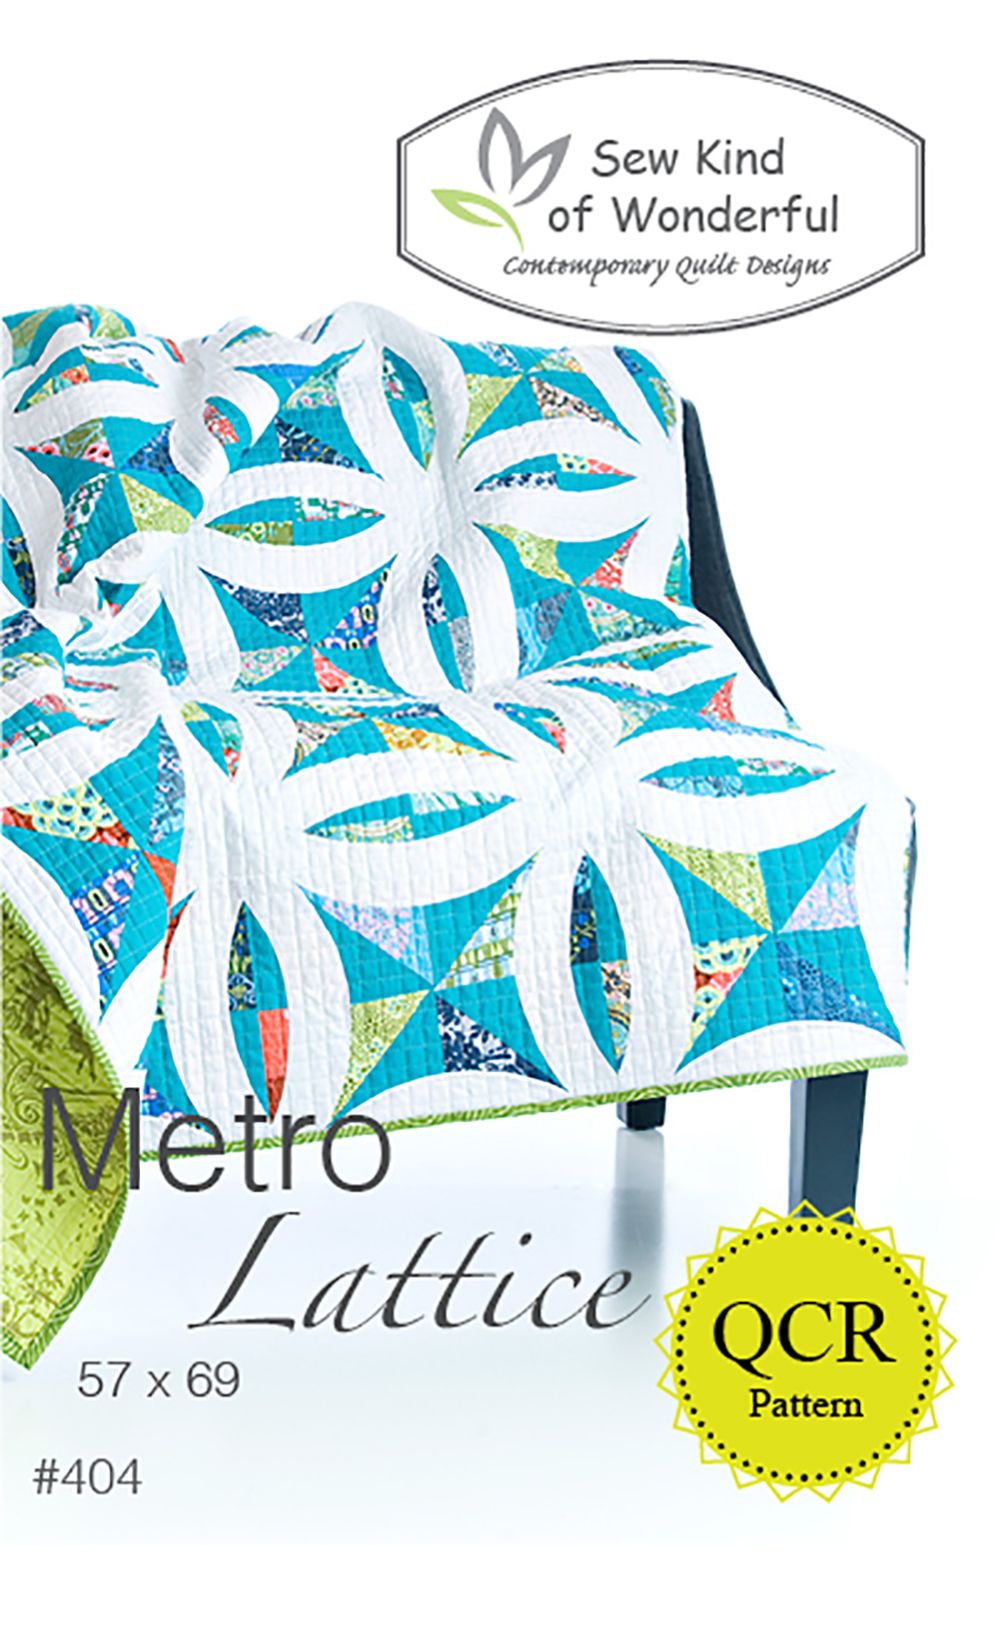 Metro Lattice Quilt Pattern by Jenny Pedigo of Sew Kind of Wonderful